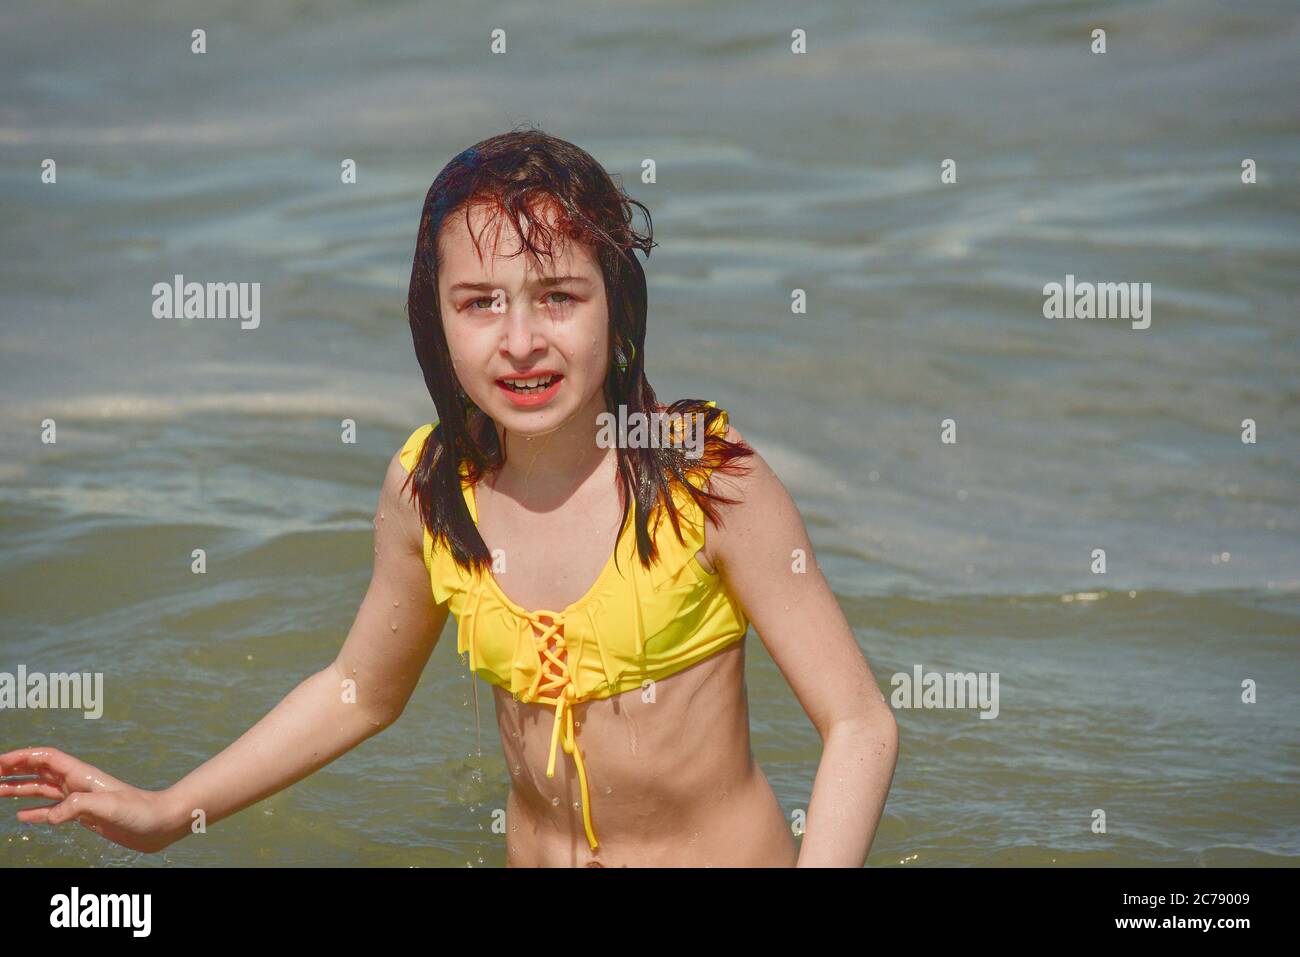 Child girl bikini fashion hi-res stock photography and images - Page 2 -  Alamy